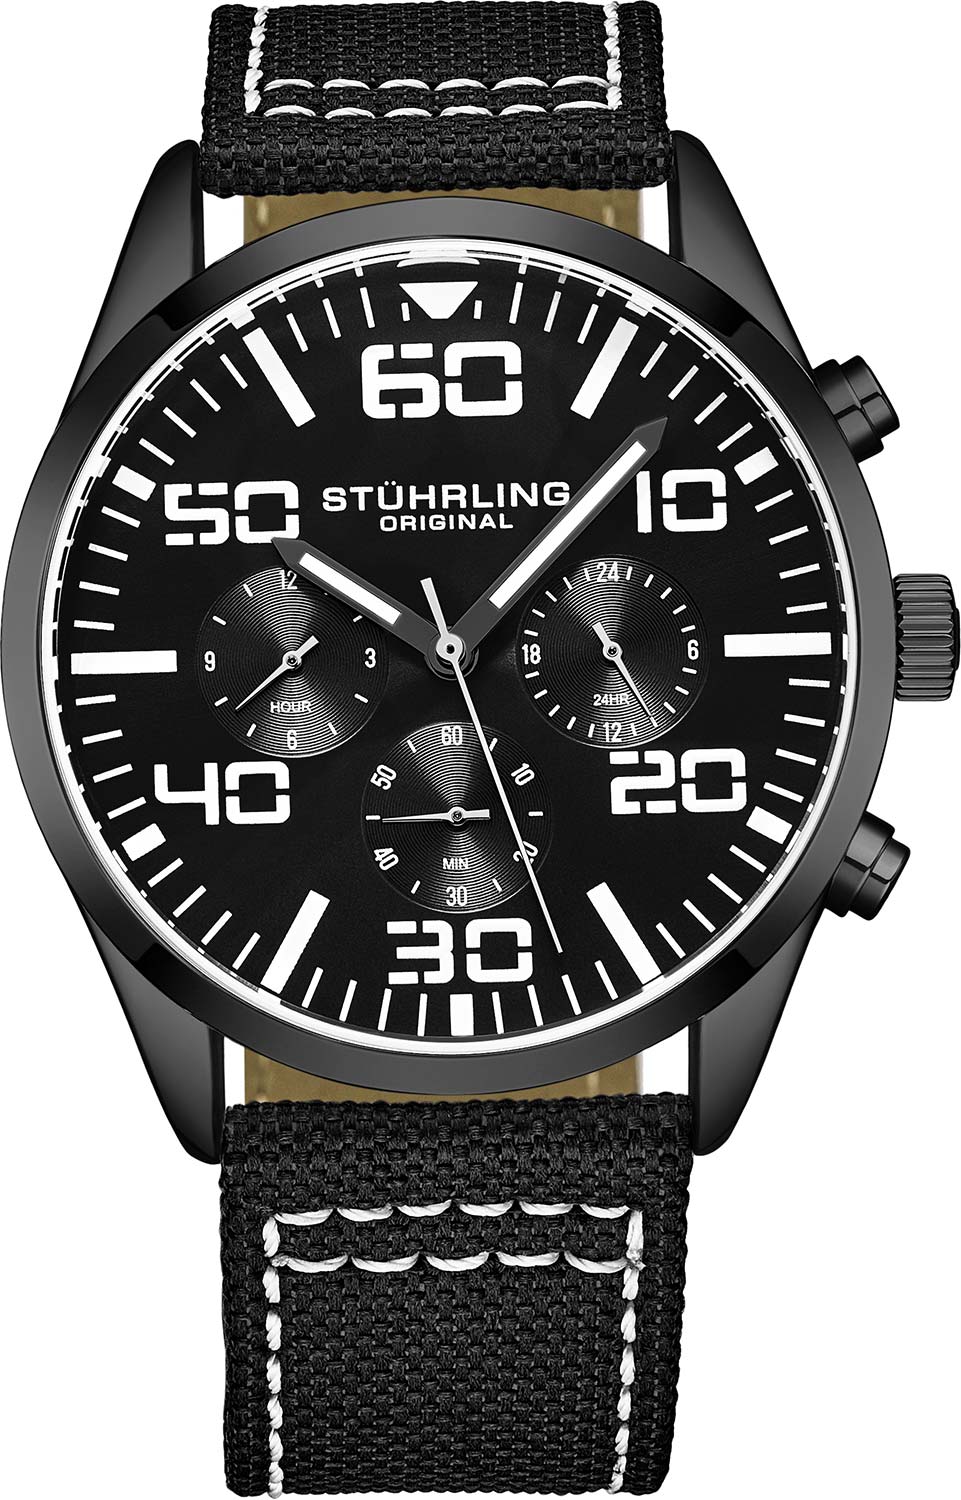 Наручные часы Stuhrling 4001.6 с хронографом